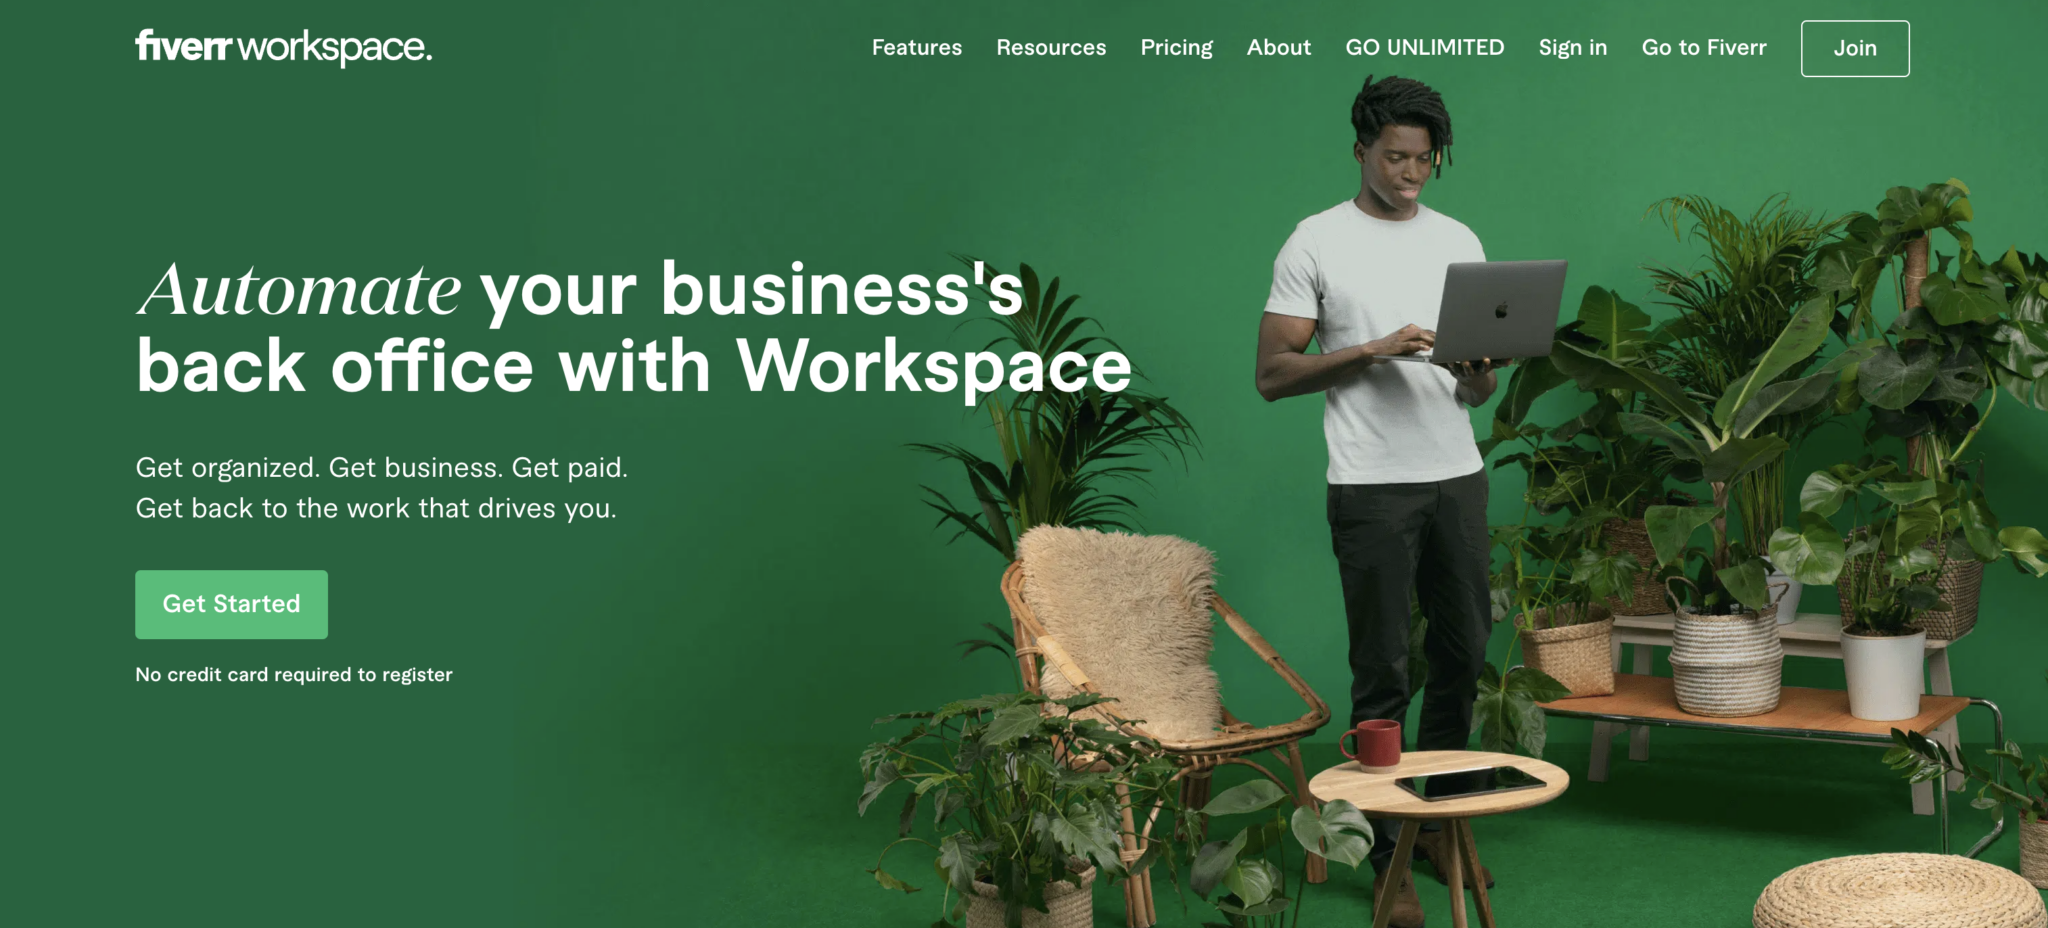 fiverr workspace homepage